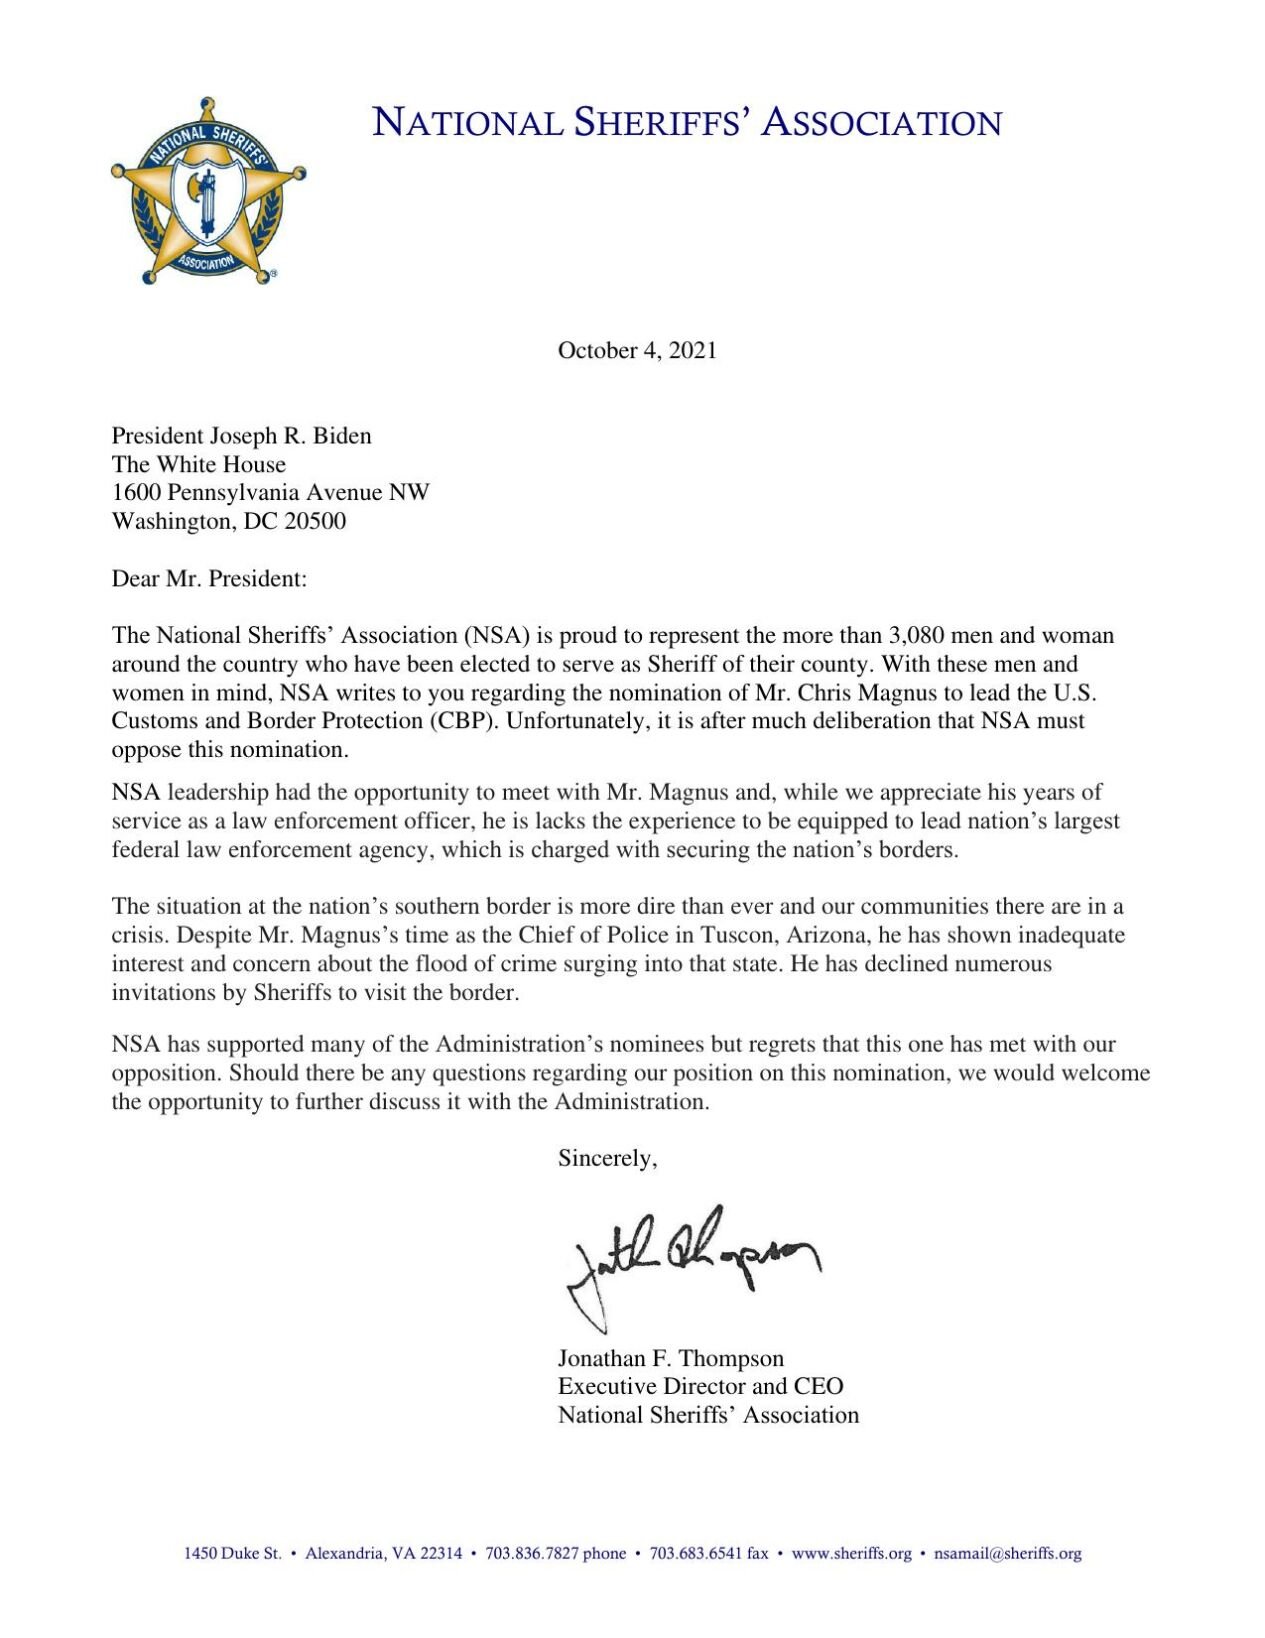 National Sheriffs' Association Letter to President Biden